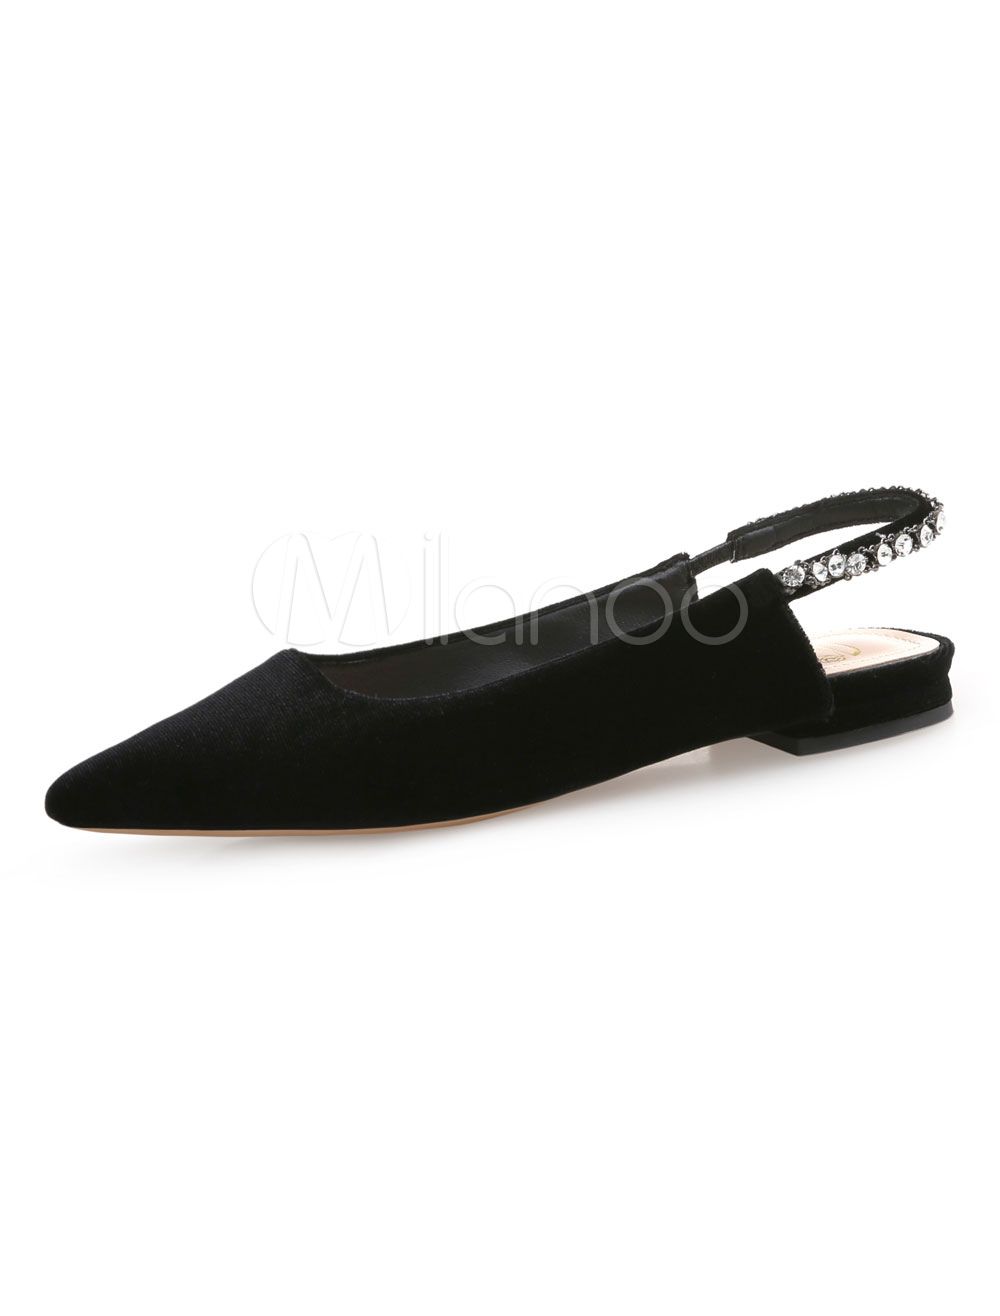 Black Flat Shoes Women's Corduroy Pointed Toe Slingbacks Flats | Milanoo